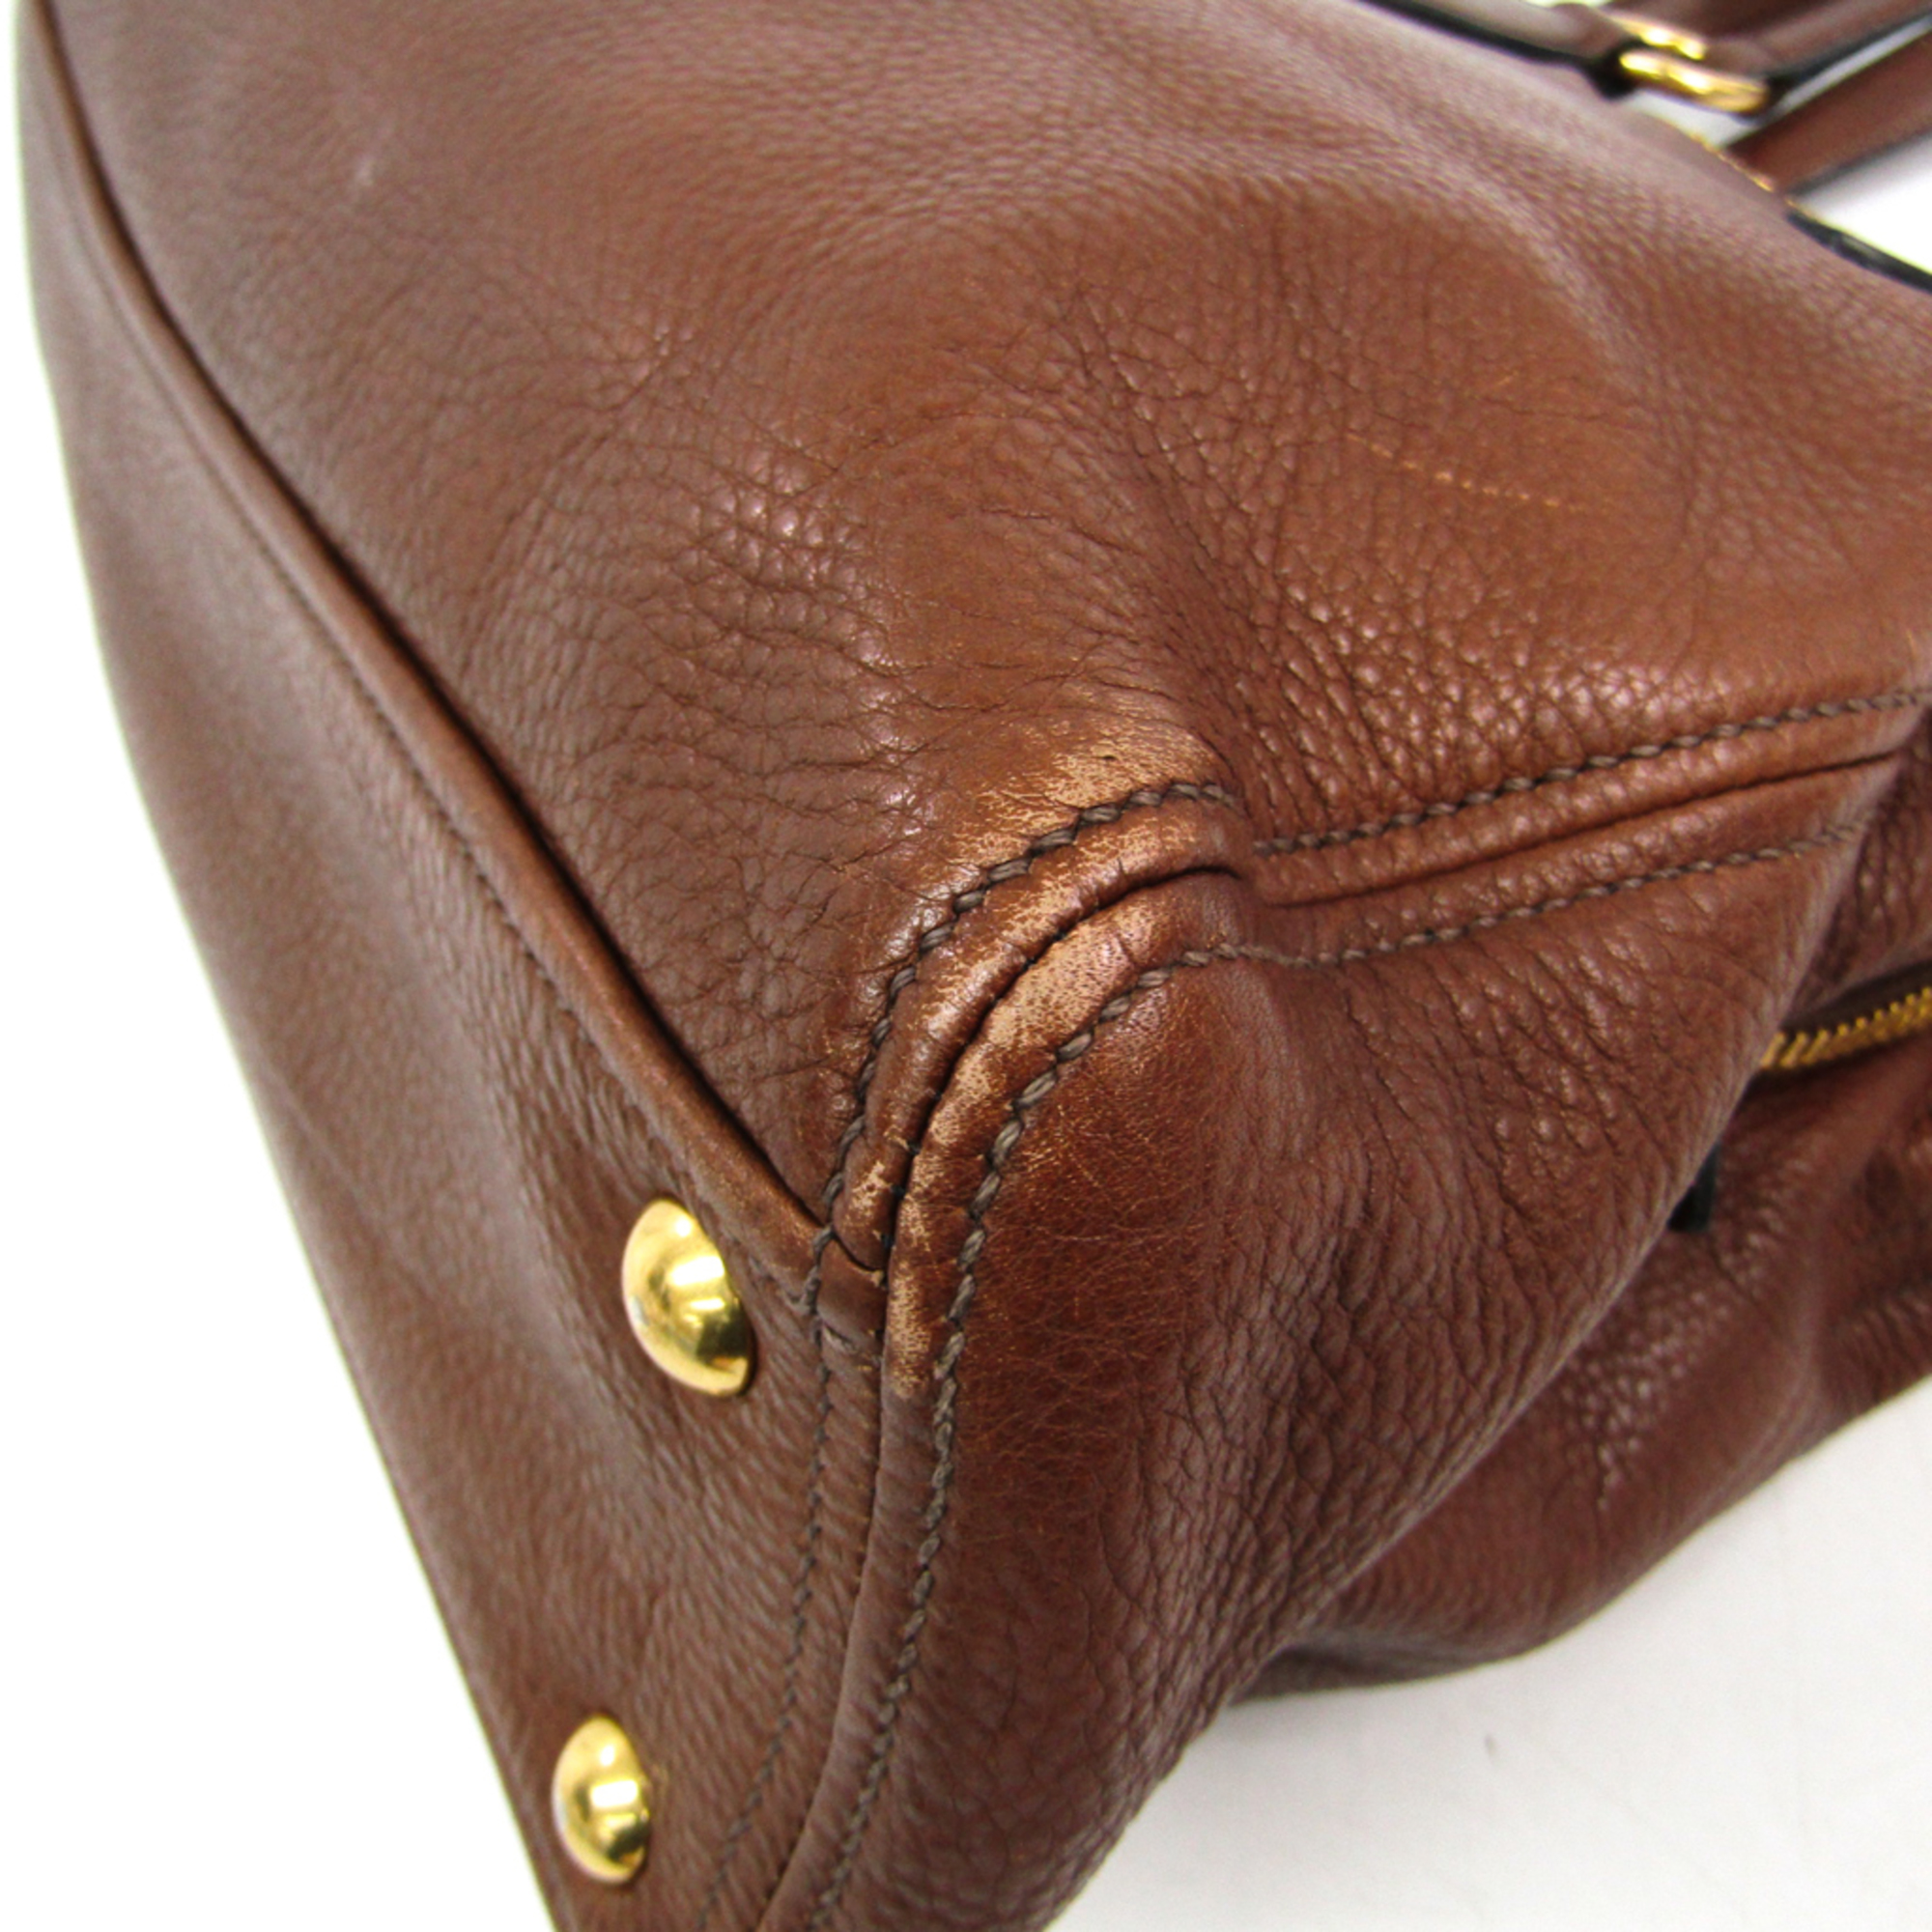 Miu Miu VITELLO PHENIX RR1901 Women's Leather Handbag,Shoulder Bag Brown